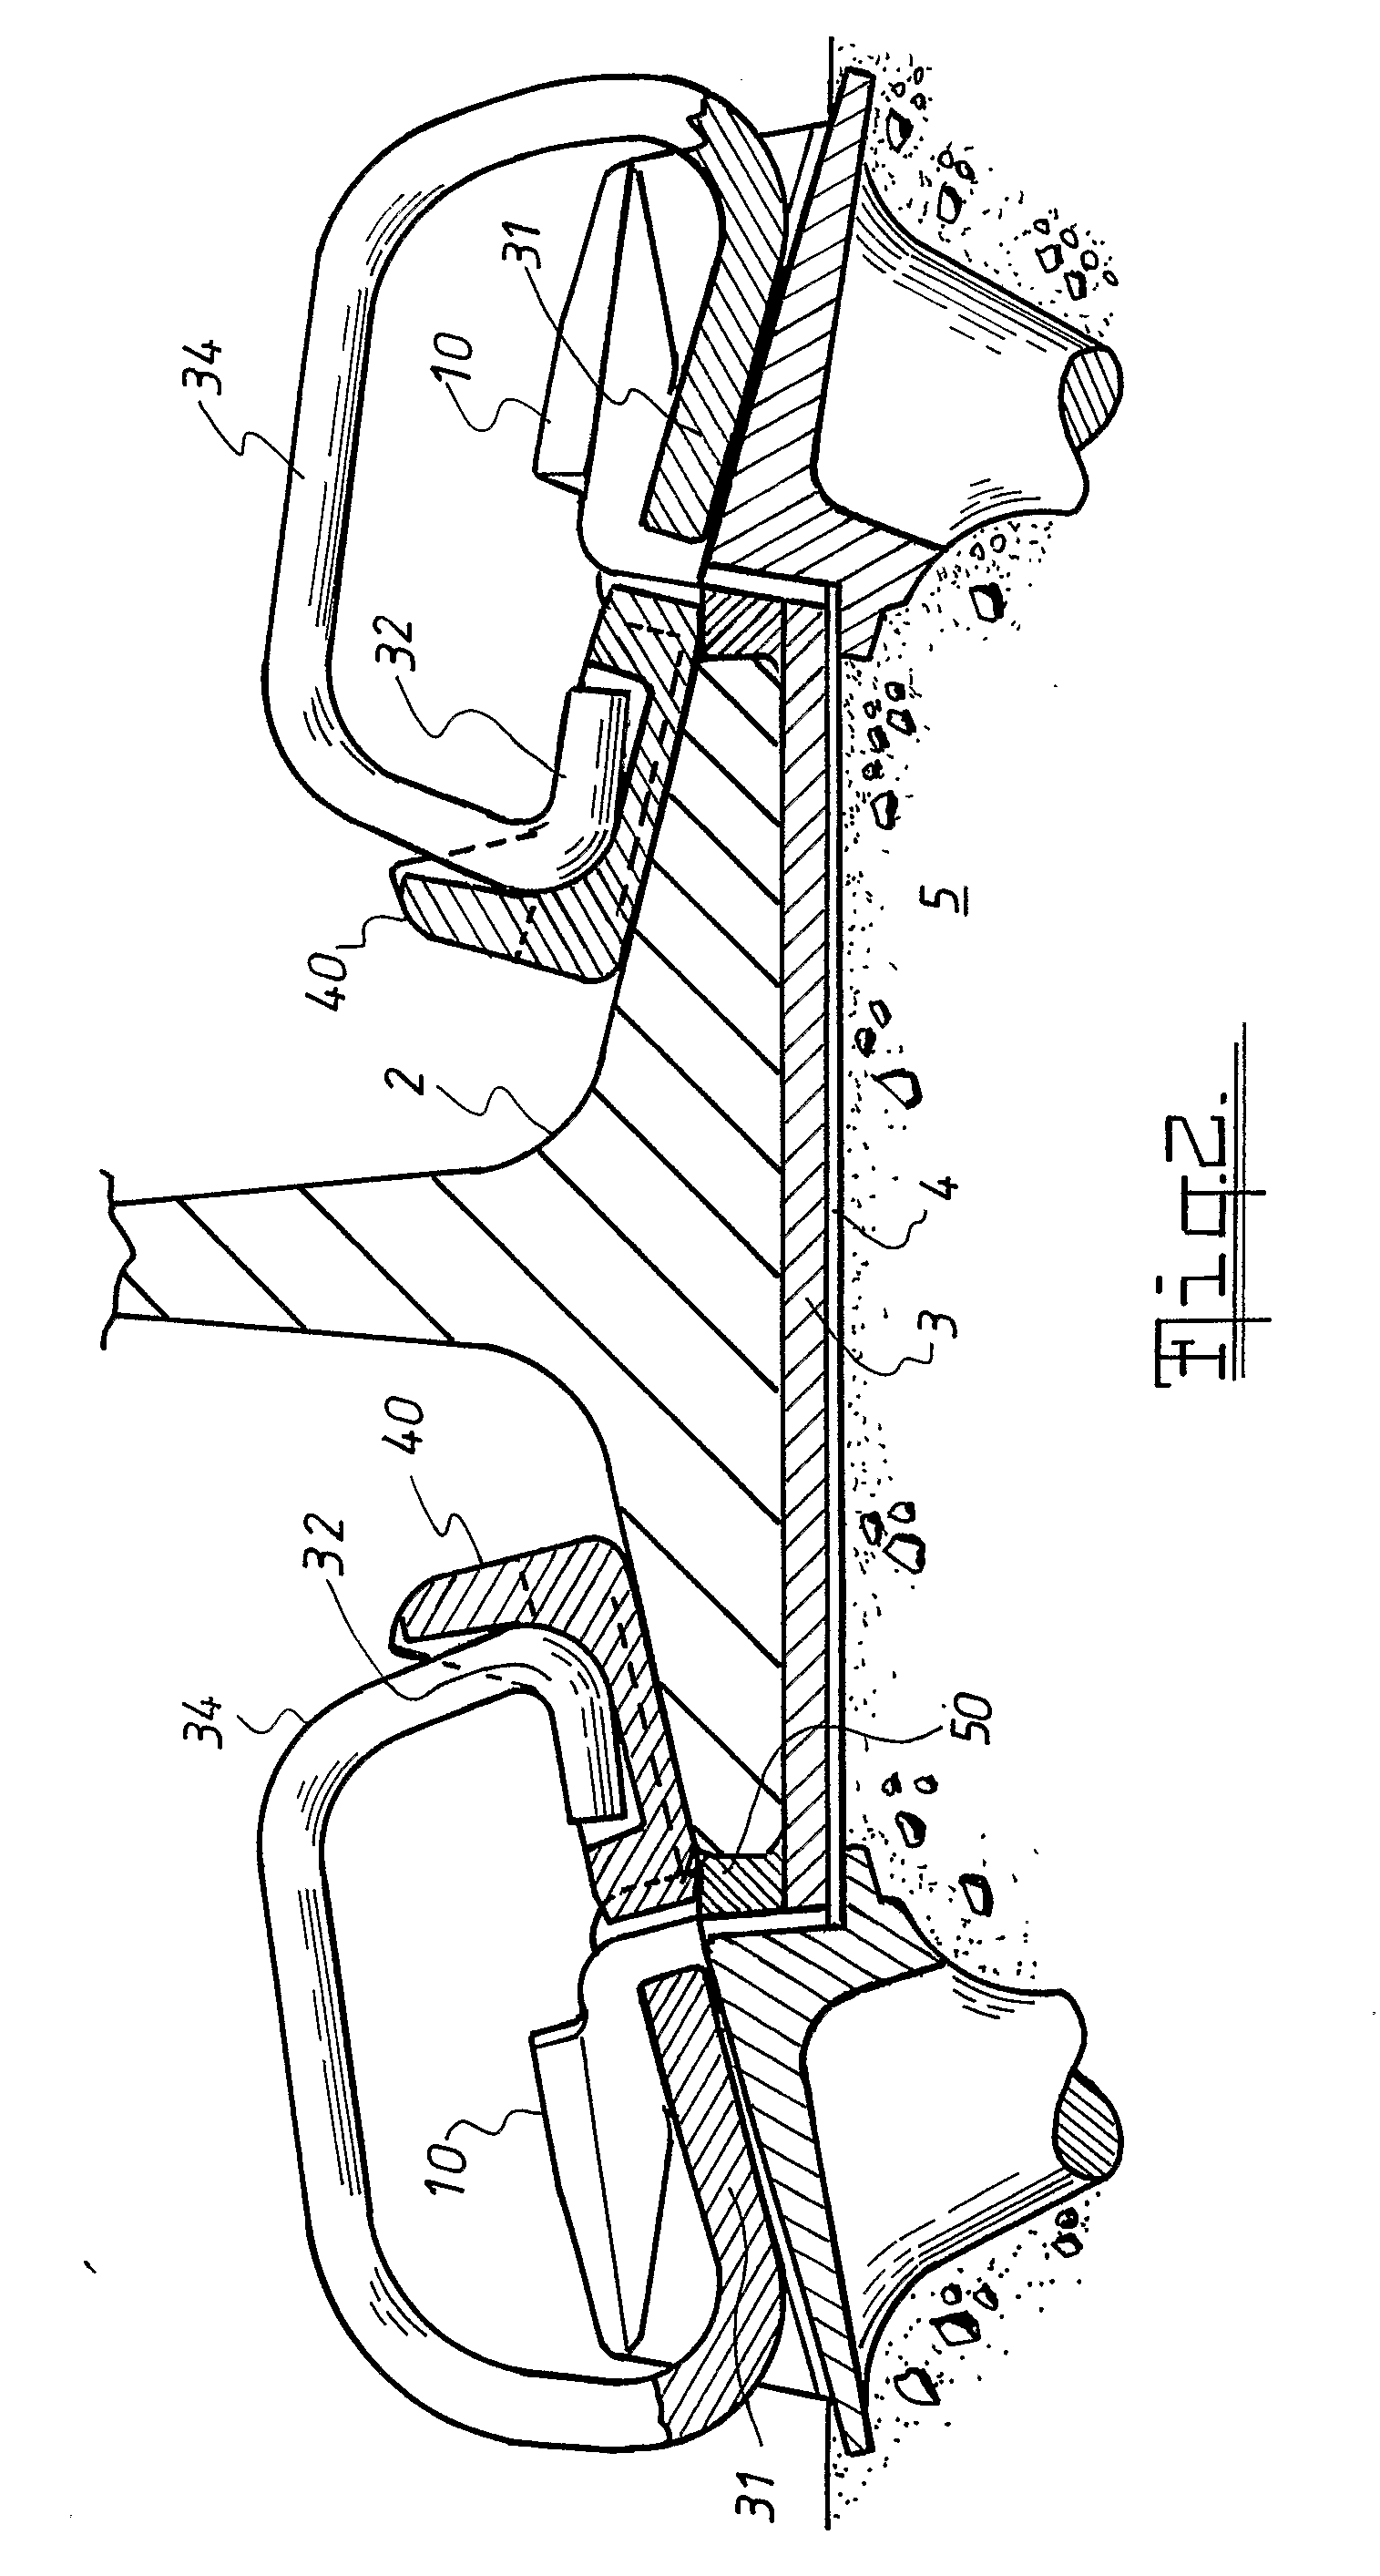 Rail Clip Insulator